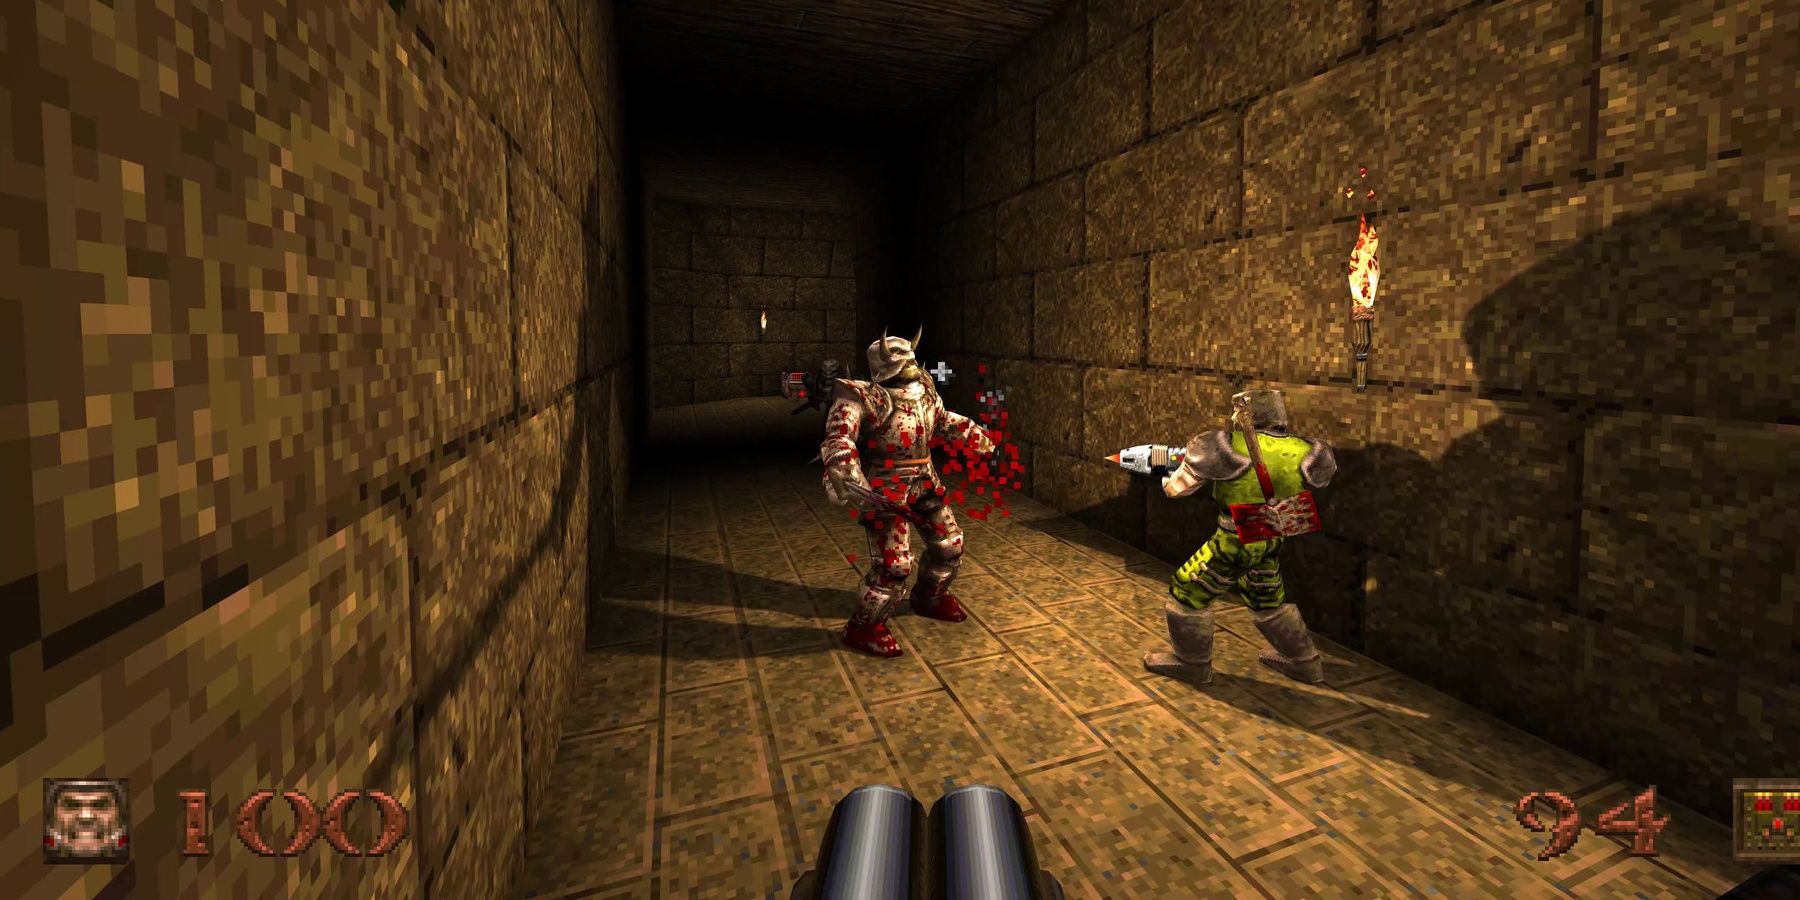 Quake remaster blasting a knight with a shotgun in a dark dungeon in multiplayer